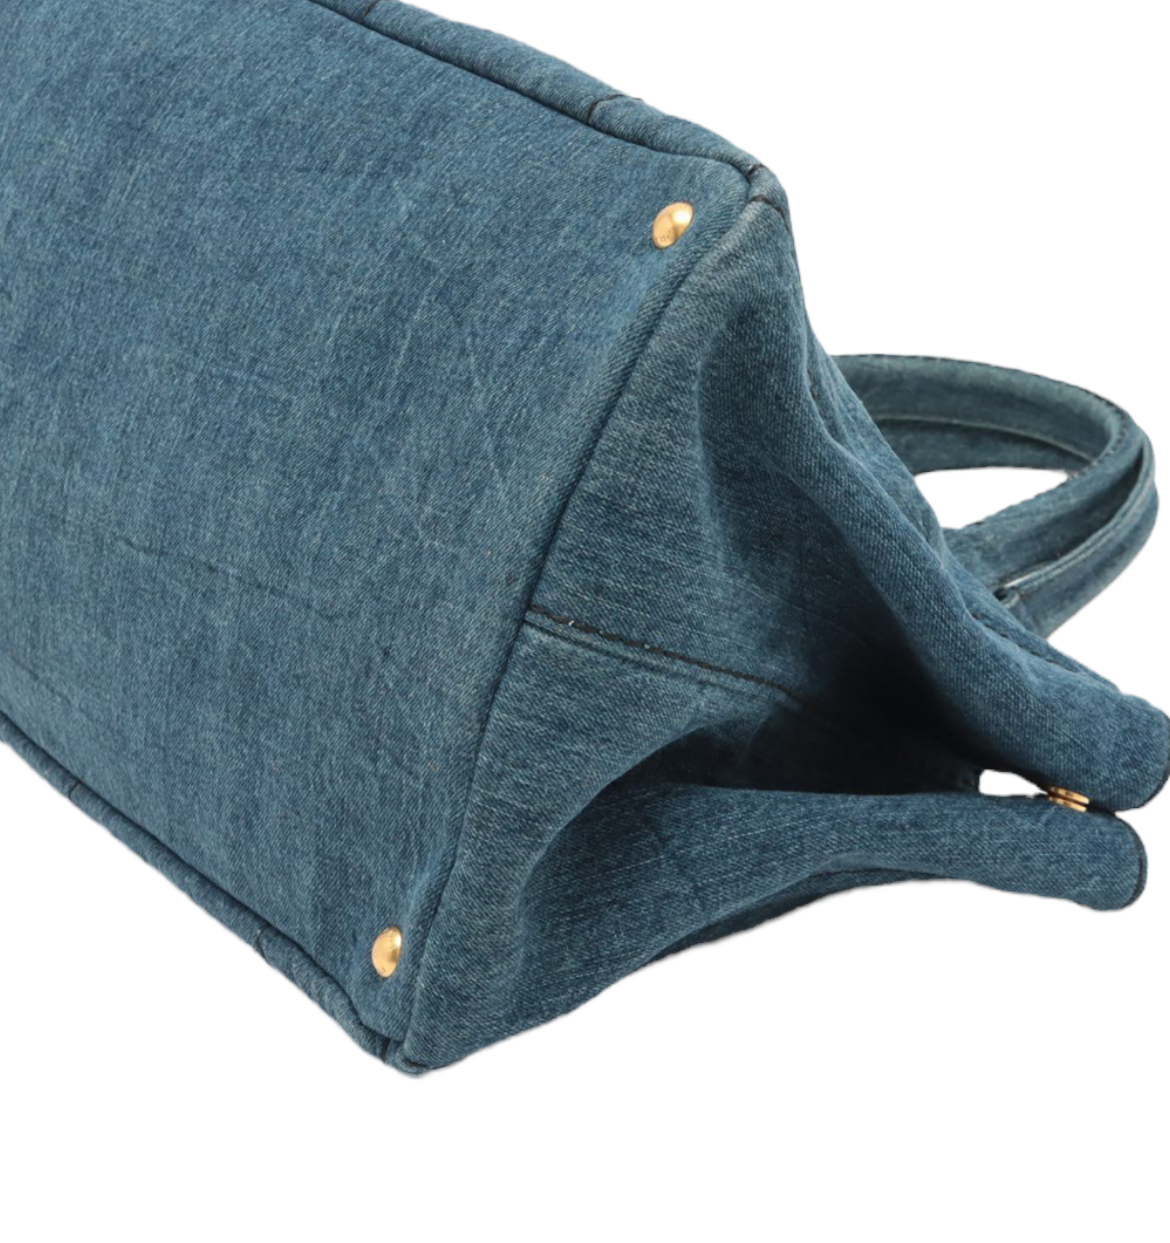 PRADA Canapa Denim Blue Tote Bag |Size: TU|